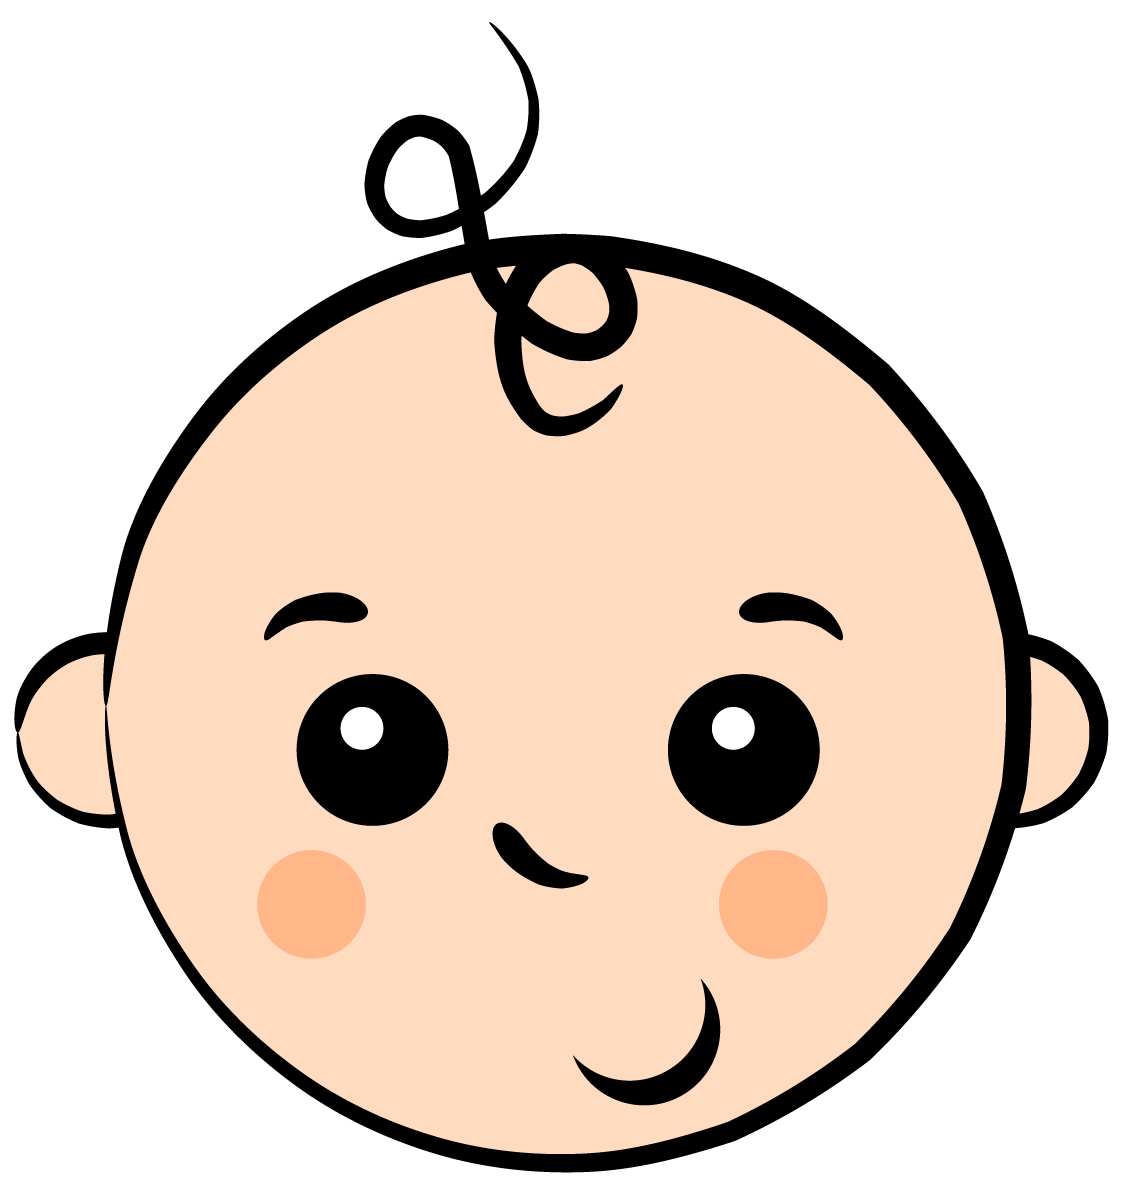 Baby face clip art free - Cli